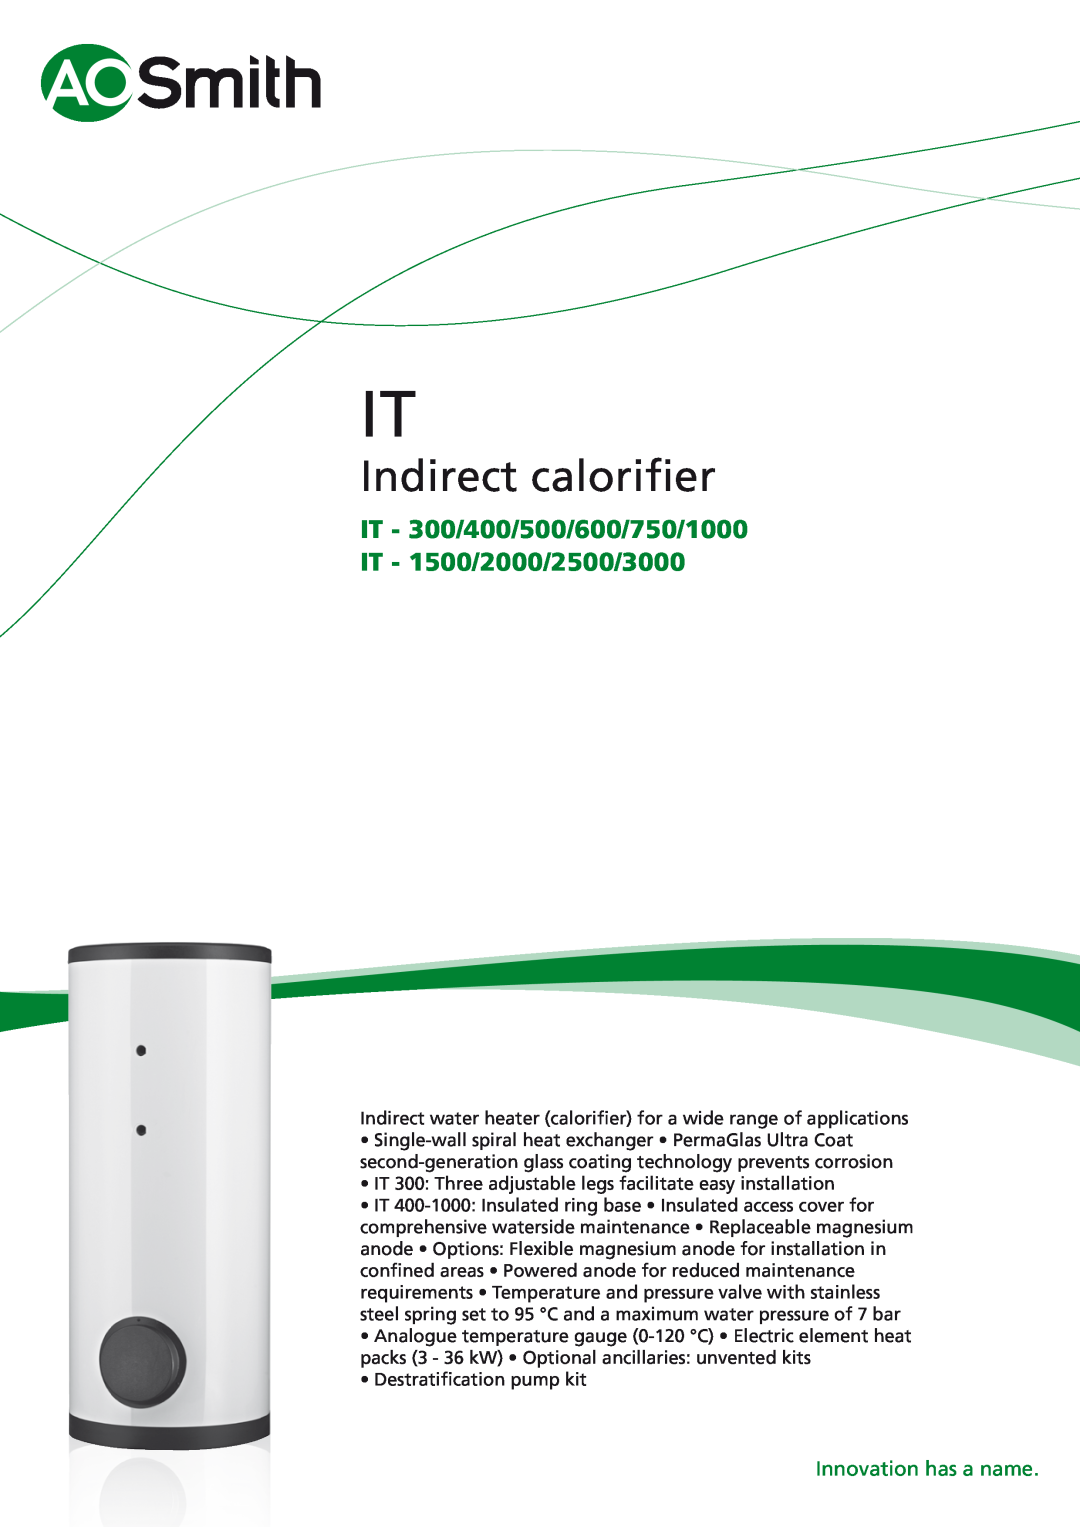 A.O. Smith manual Indirect calorifier, IT - 300/400/500/600/750/1000 IT - 1500/2000/2500/3000, Innovation has a name 